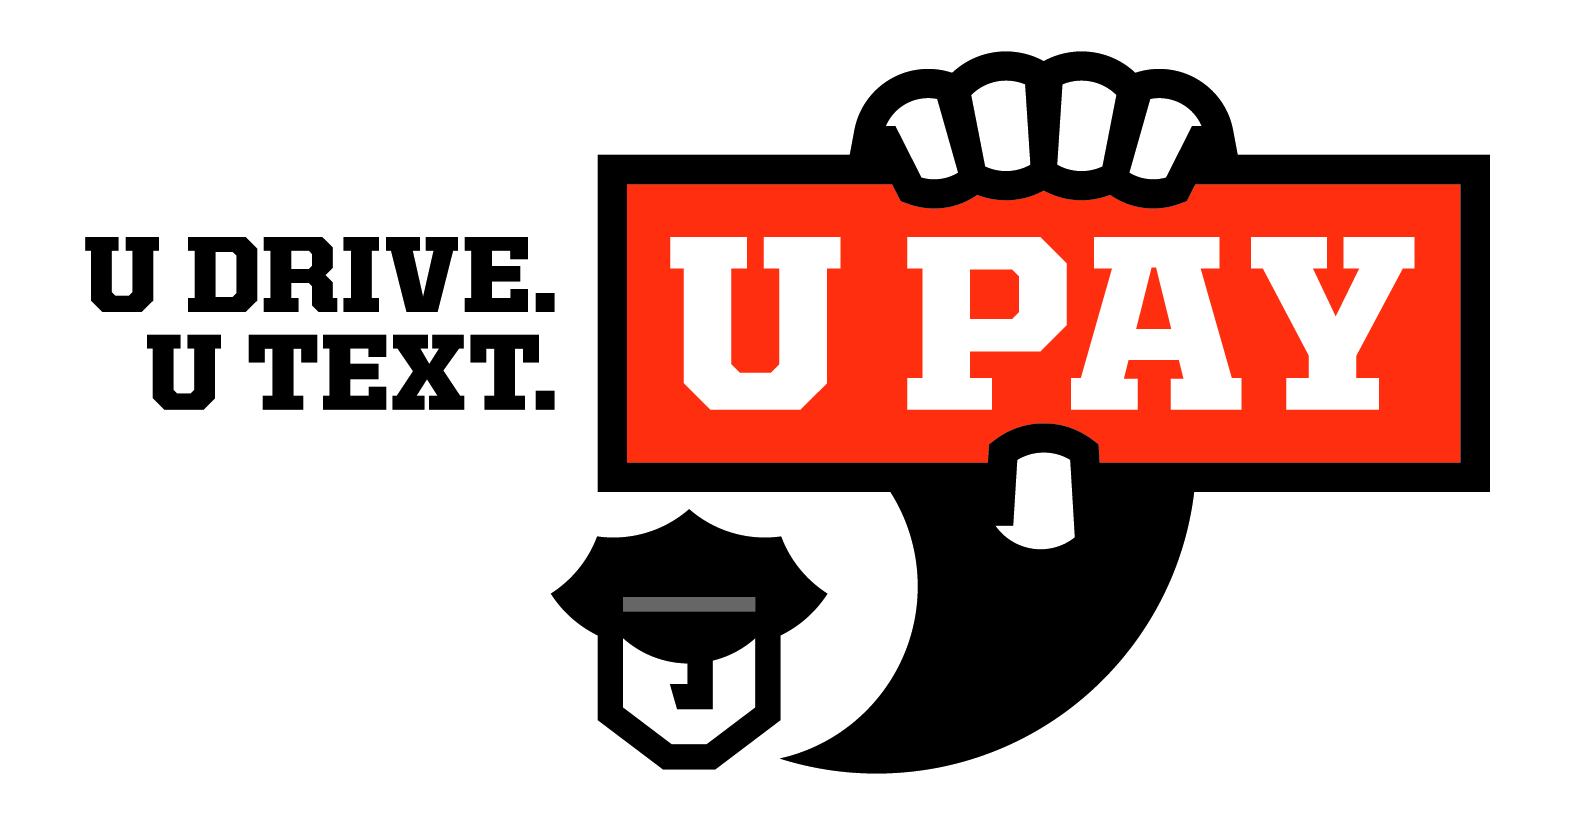 NHTSA DIstracted Driving Logo: U Drive. U Text. U Pay